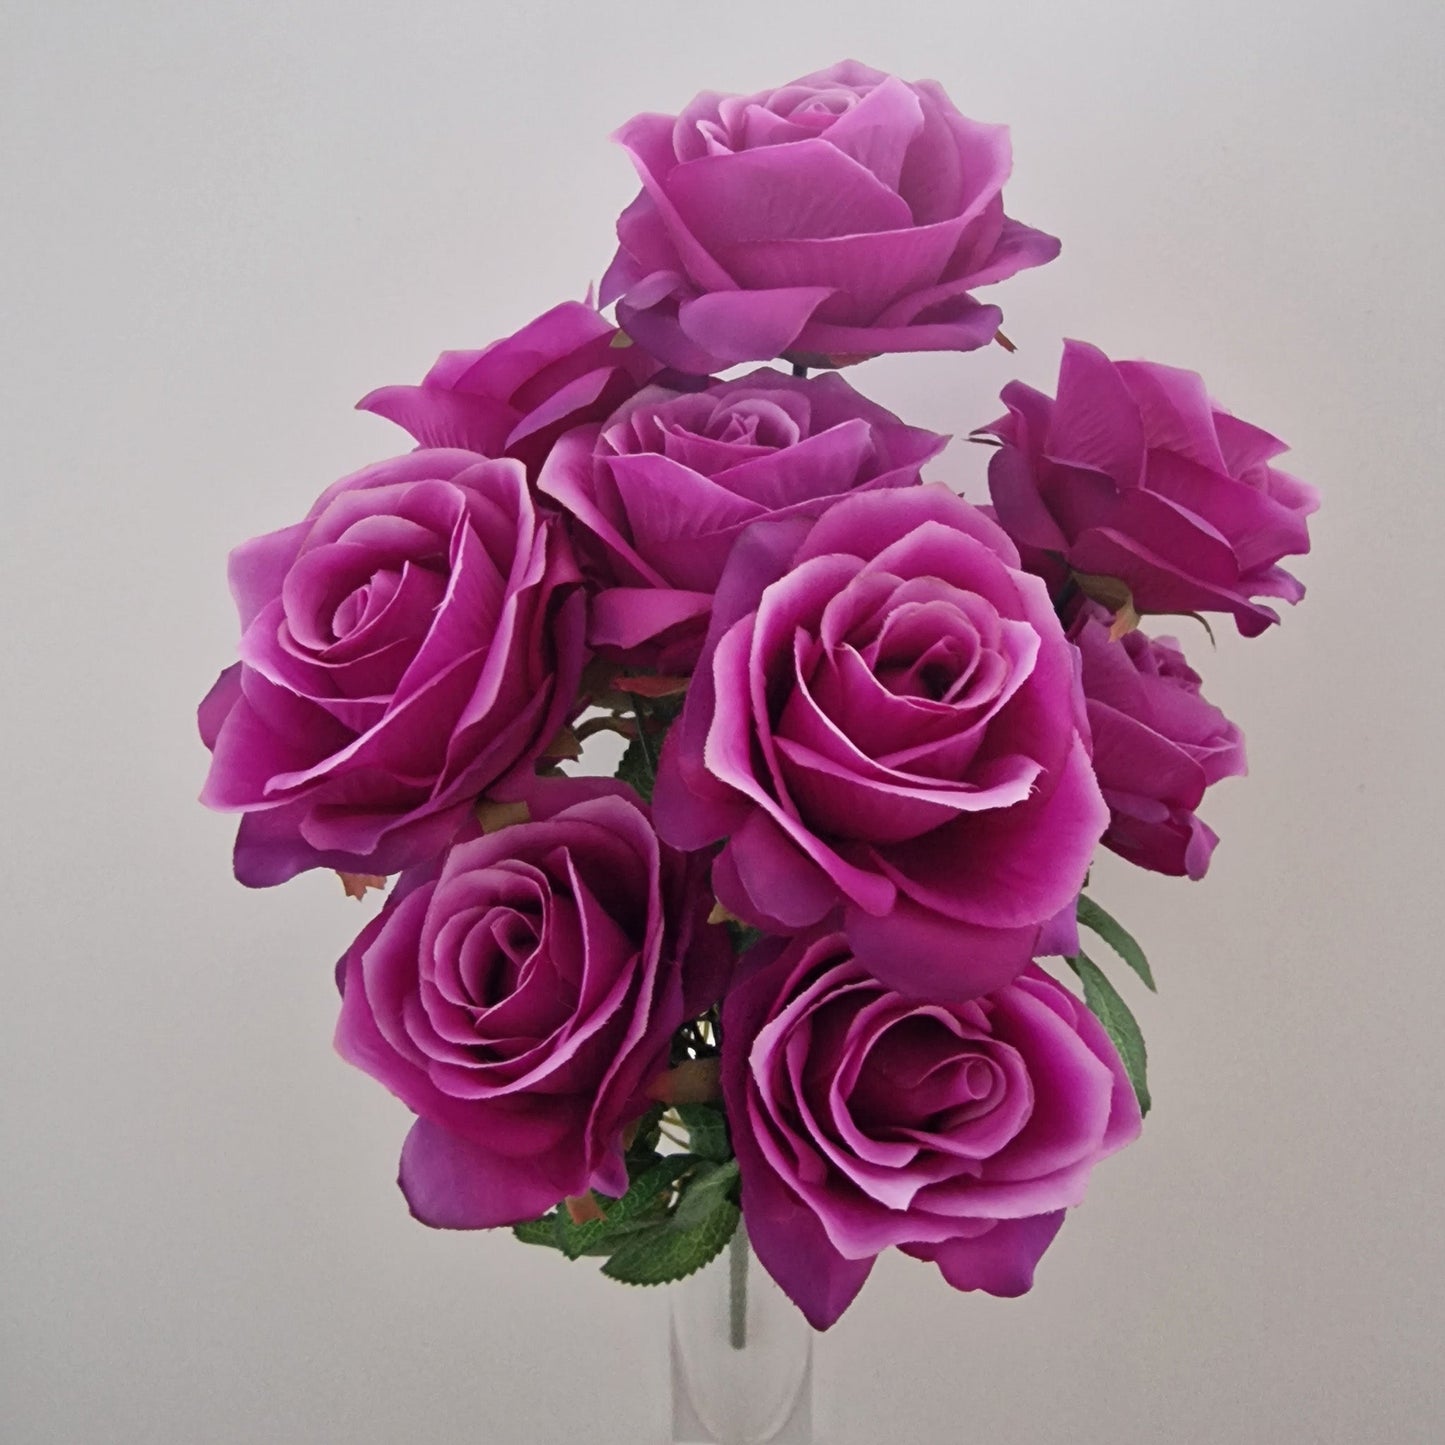 Beautiful Large Open Rose Bouquet in Purple 12 Stems Amor Flowers - Amor Flowers